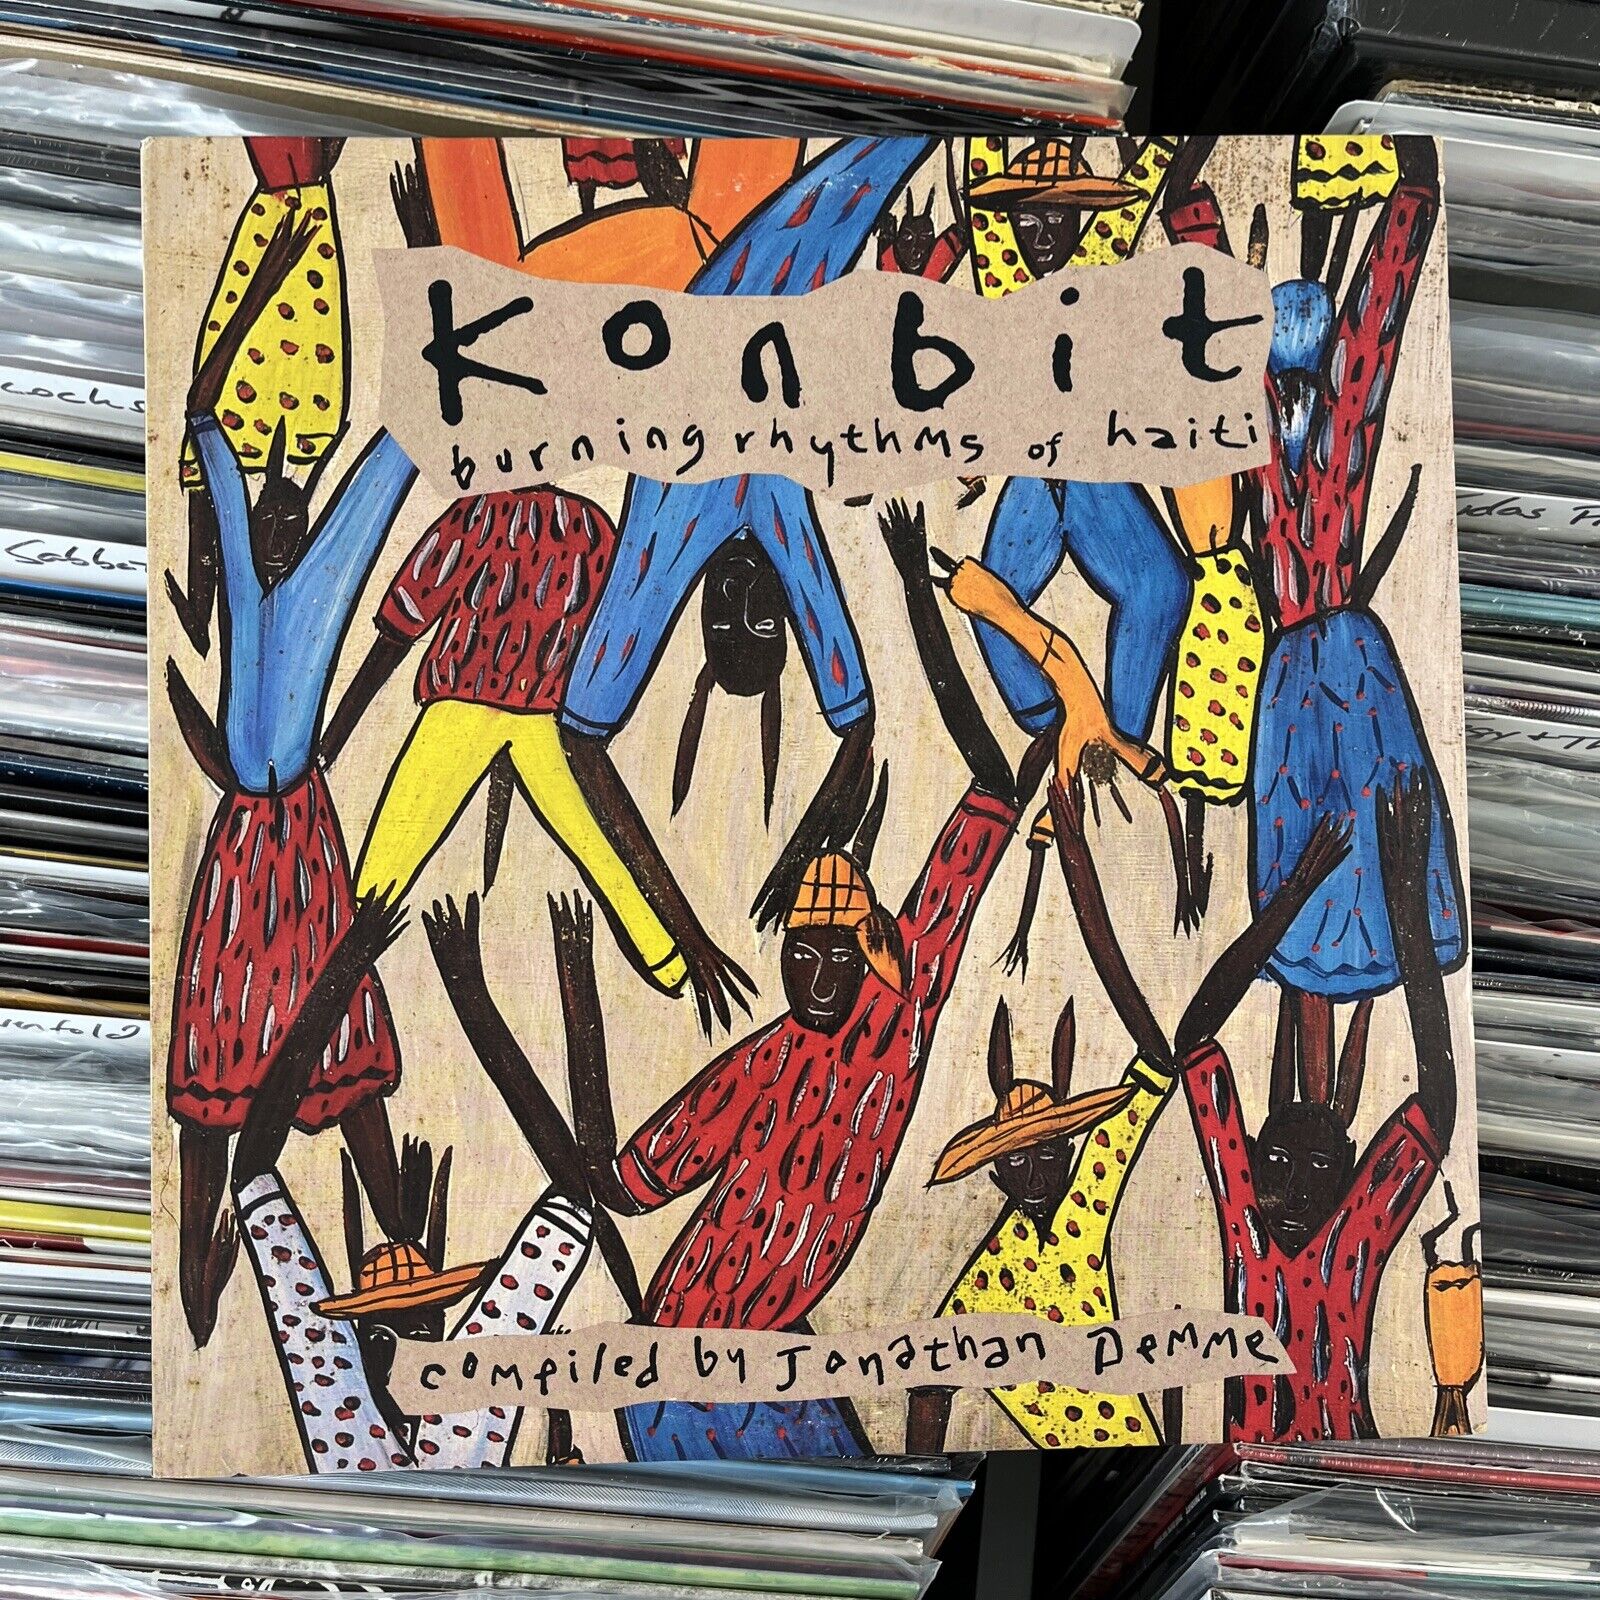 Konbit - Burning Rhythms Of Haiti - Vinyl LP Record Album EX